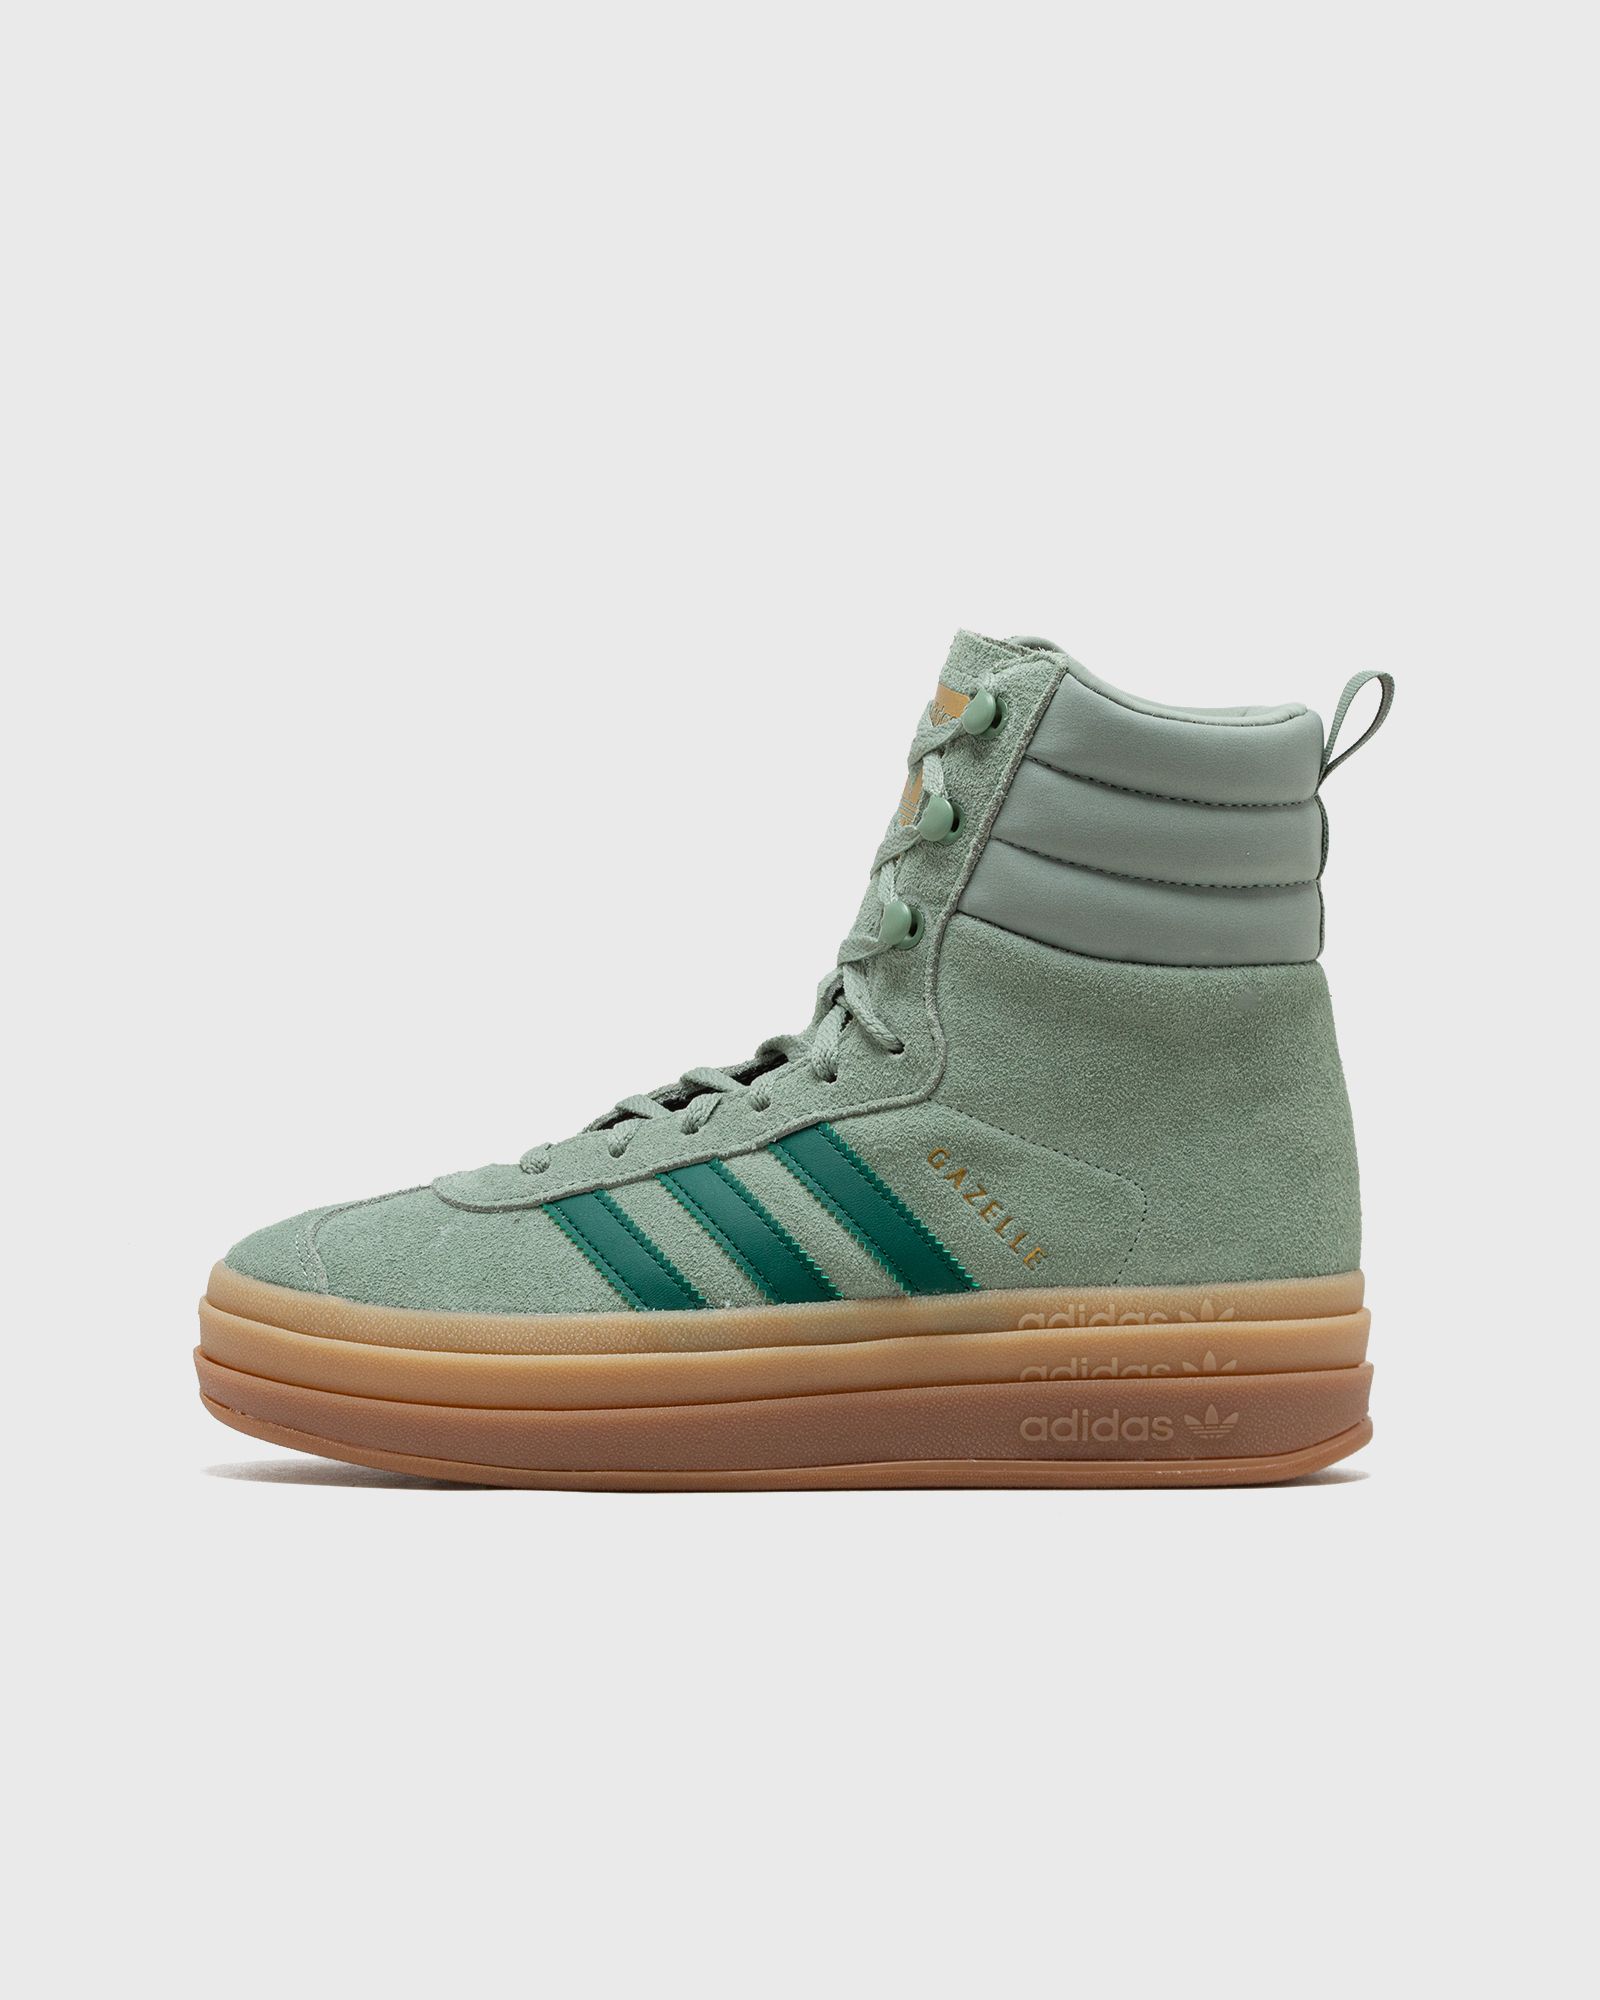 Adidas - wmns gazelle boot women boots green in größe:38 2/3